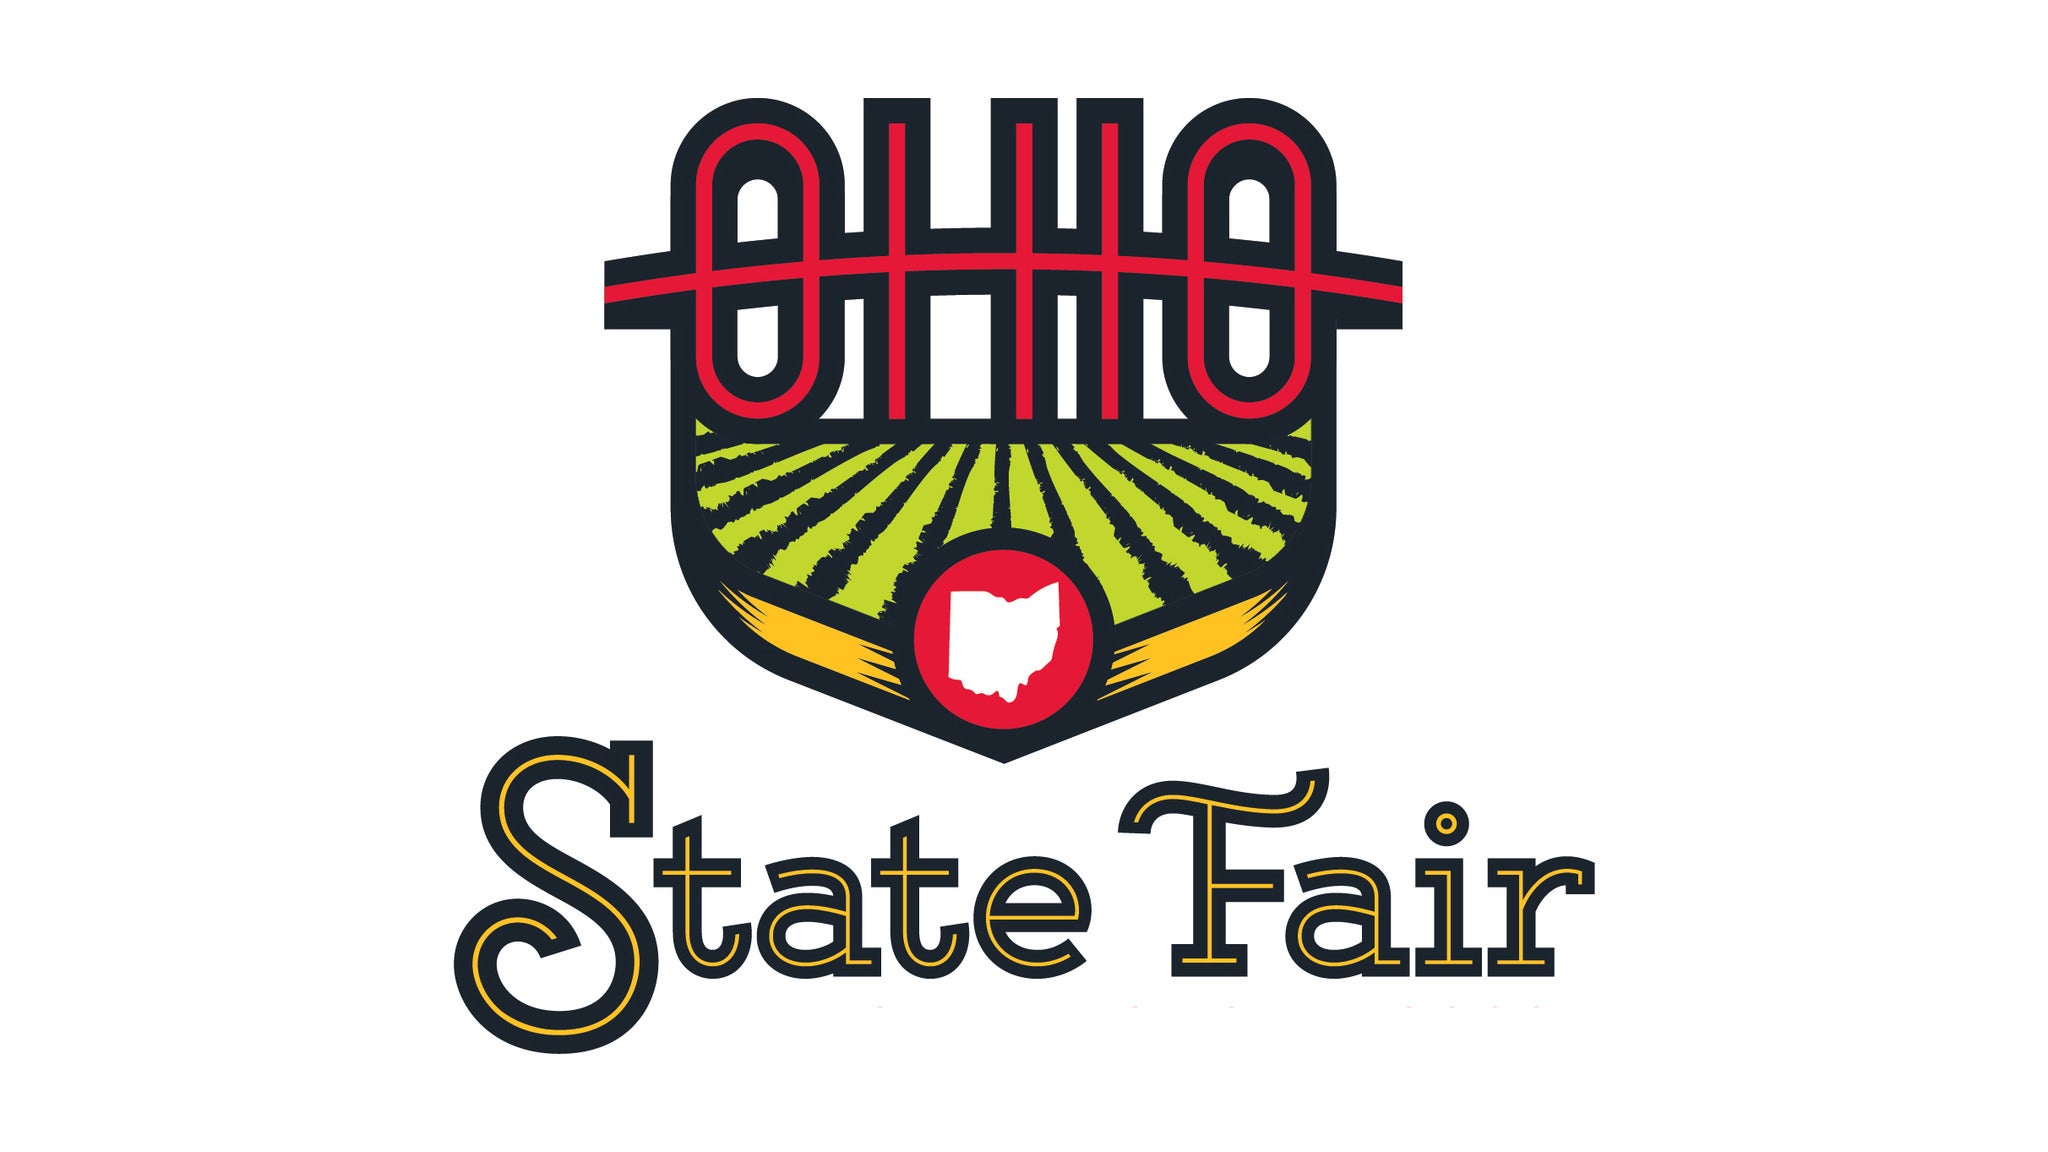 Ohio State Fair Tickets | Event Dates & Schedule | Ticketmaster.com